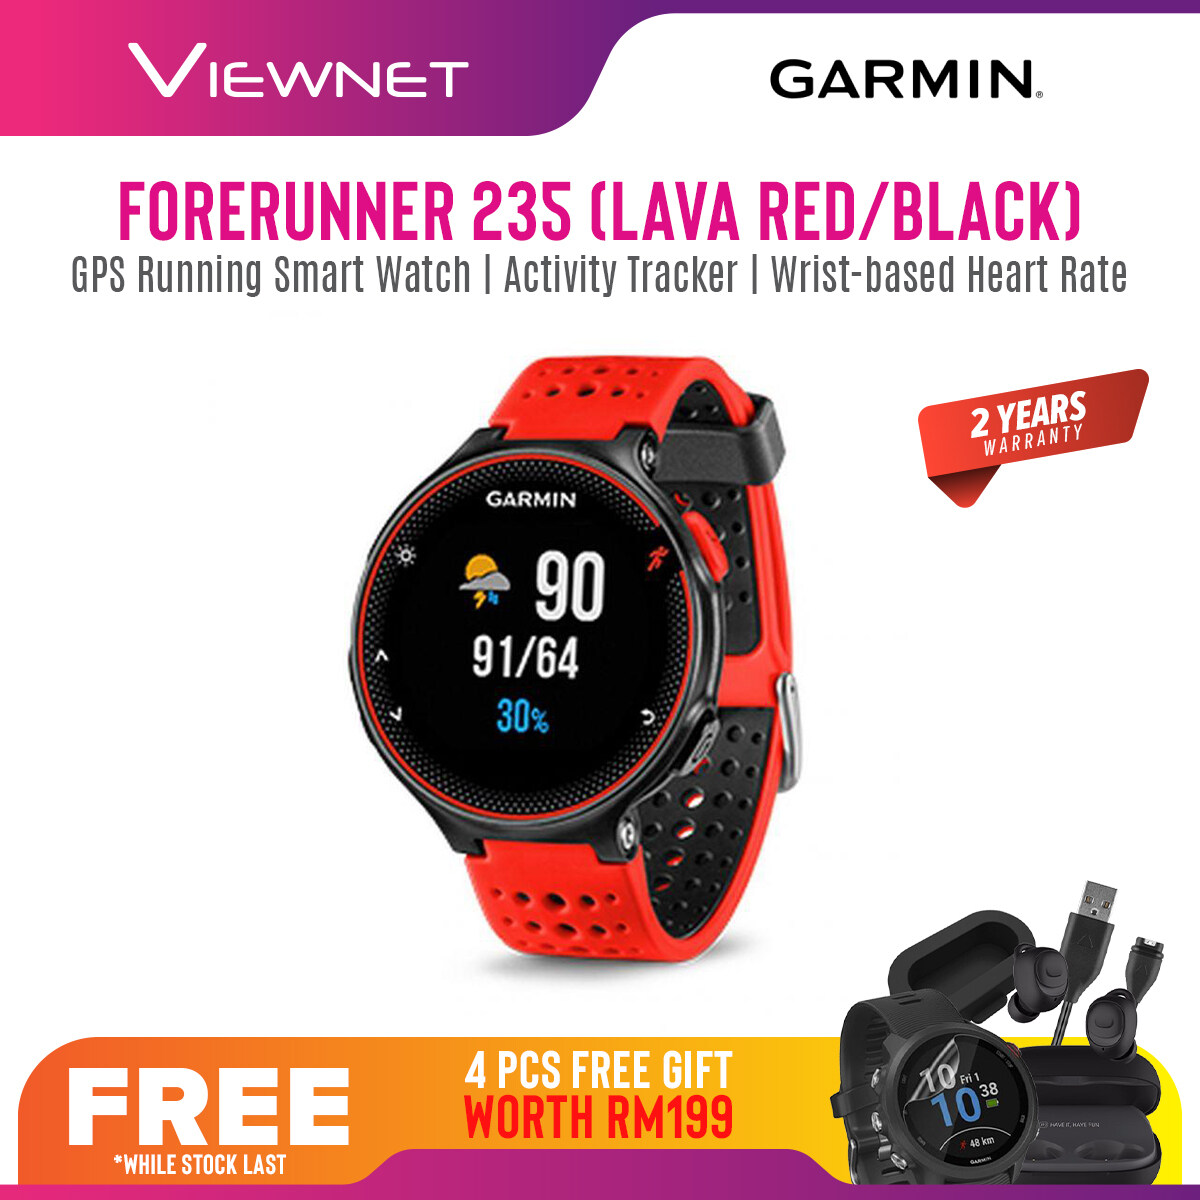 Garmin Forerunner 235 GPS Running Sport Watch Smart Watch Activity Tracker with Wrist-based Heart Rate Monitor